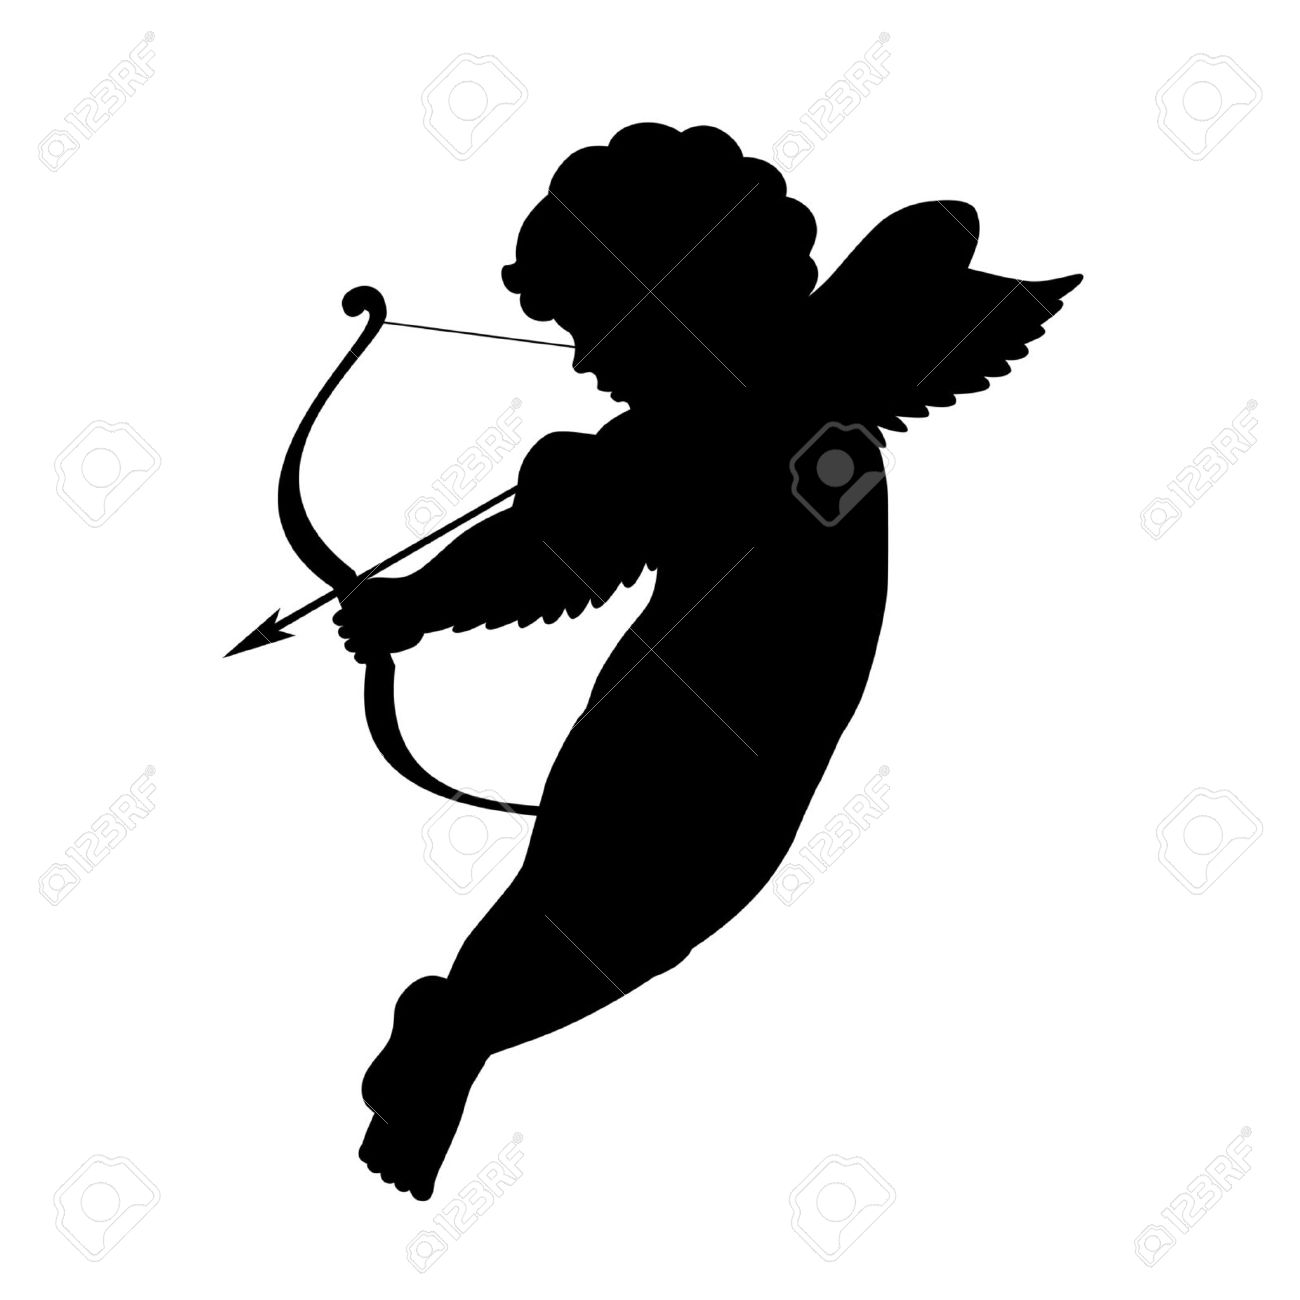 25583357-black-vector-silhouette-of-a-cupid-shooting-arrow.jpg